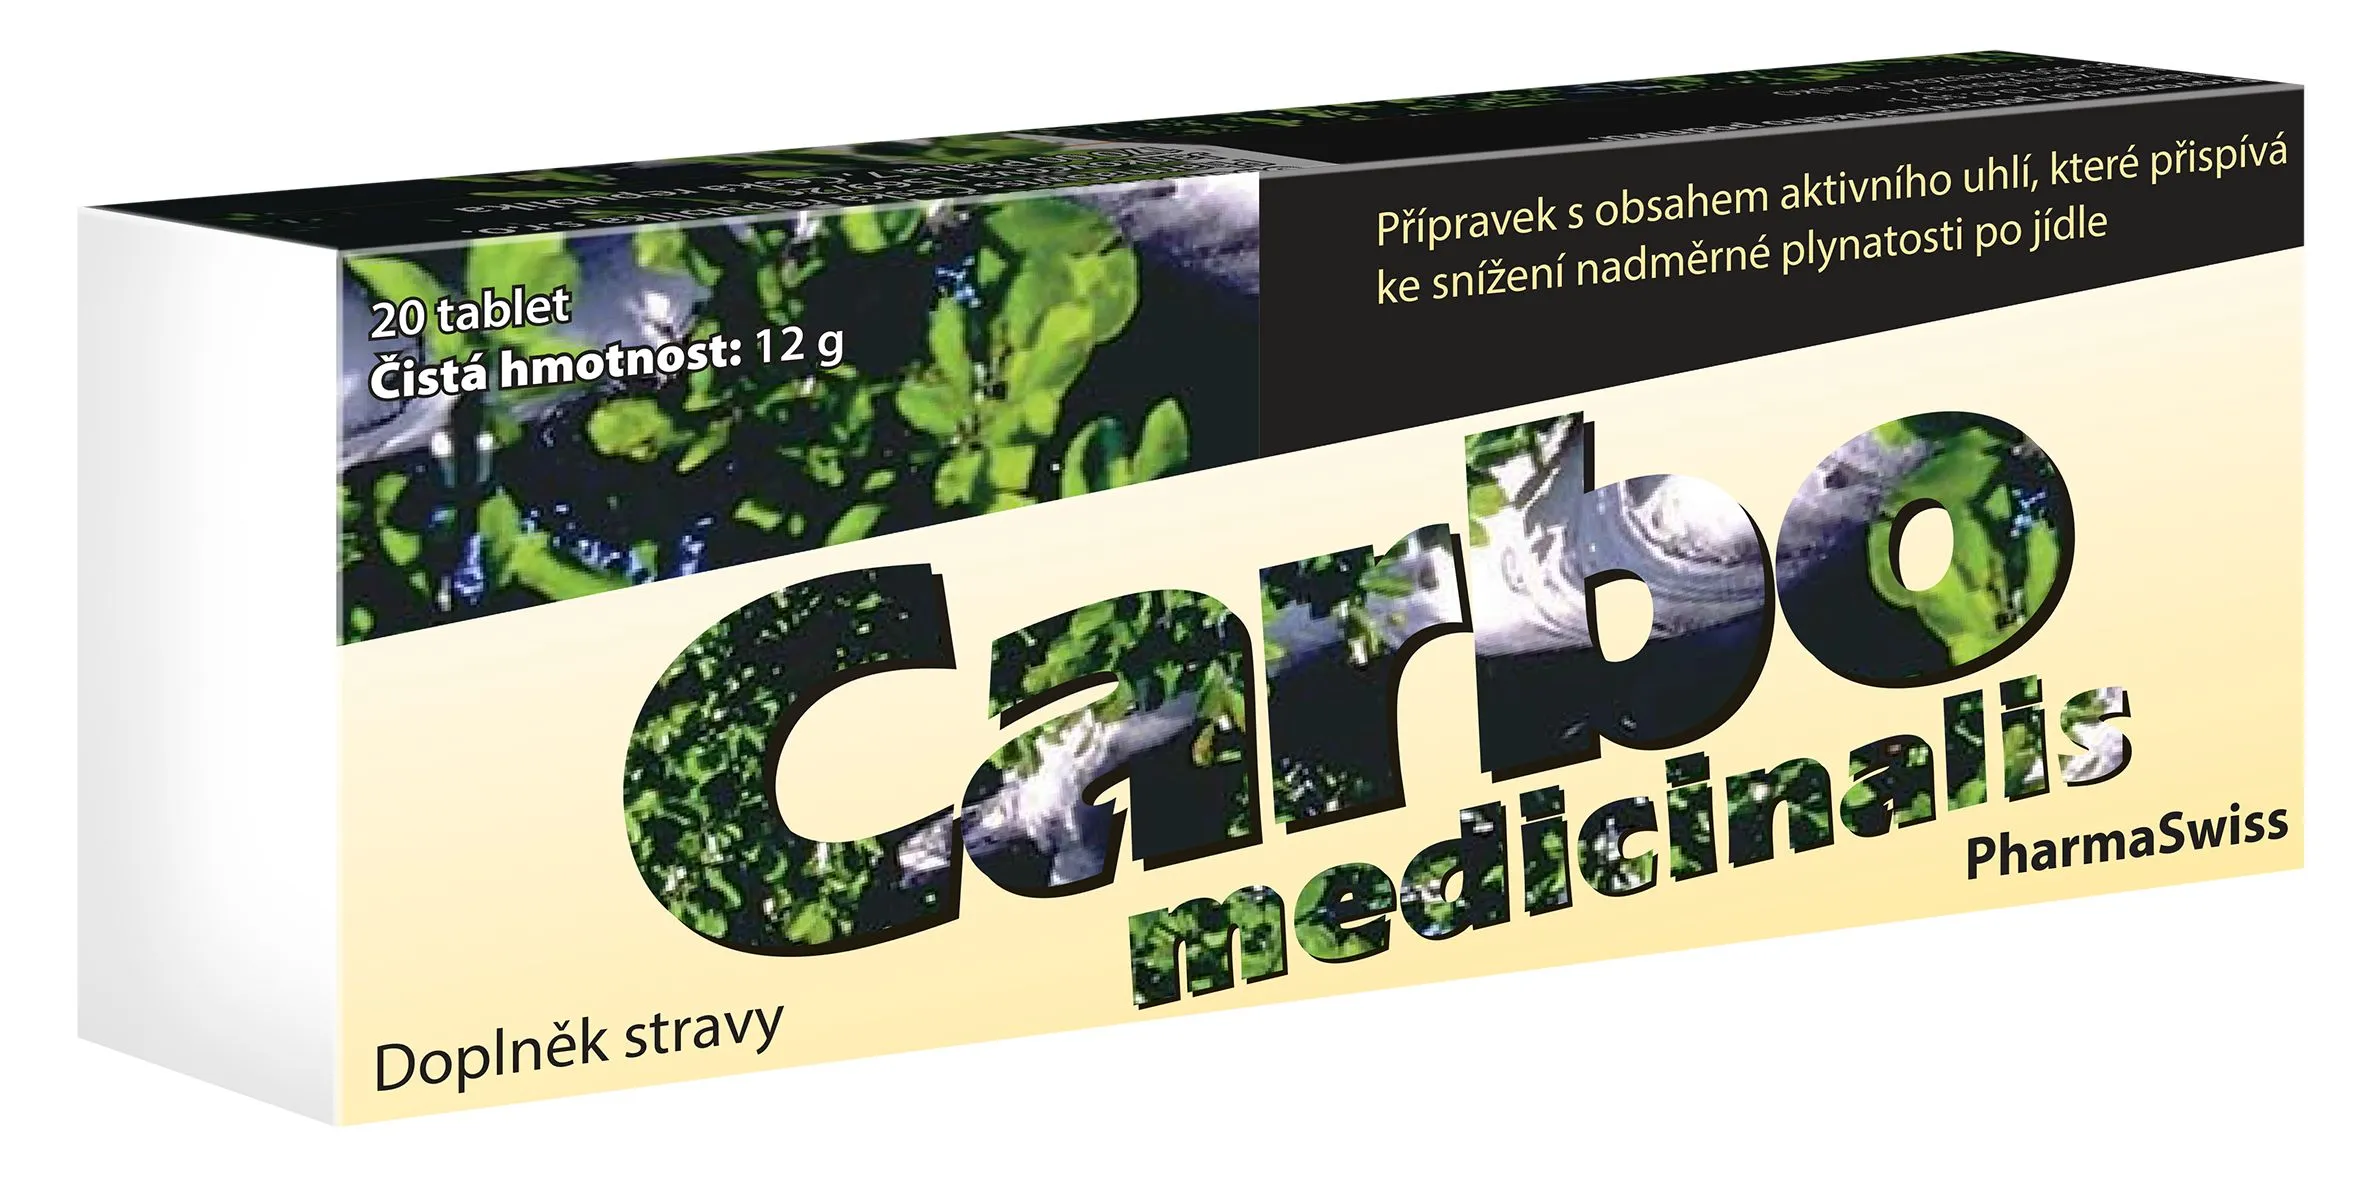 PharmaSwiss Carbo medicinalis 20 tablet